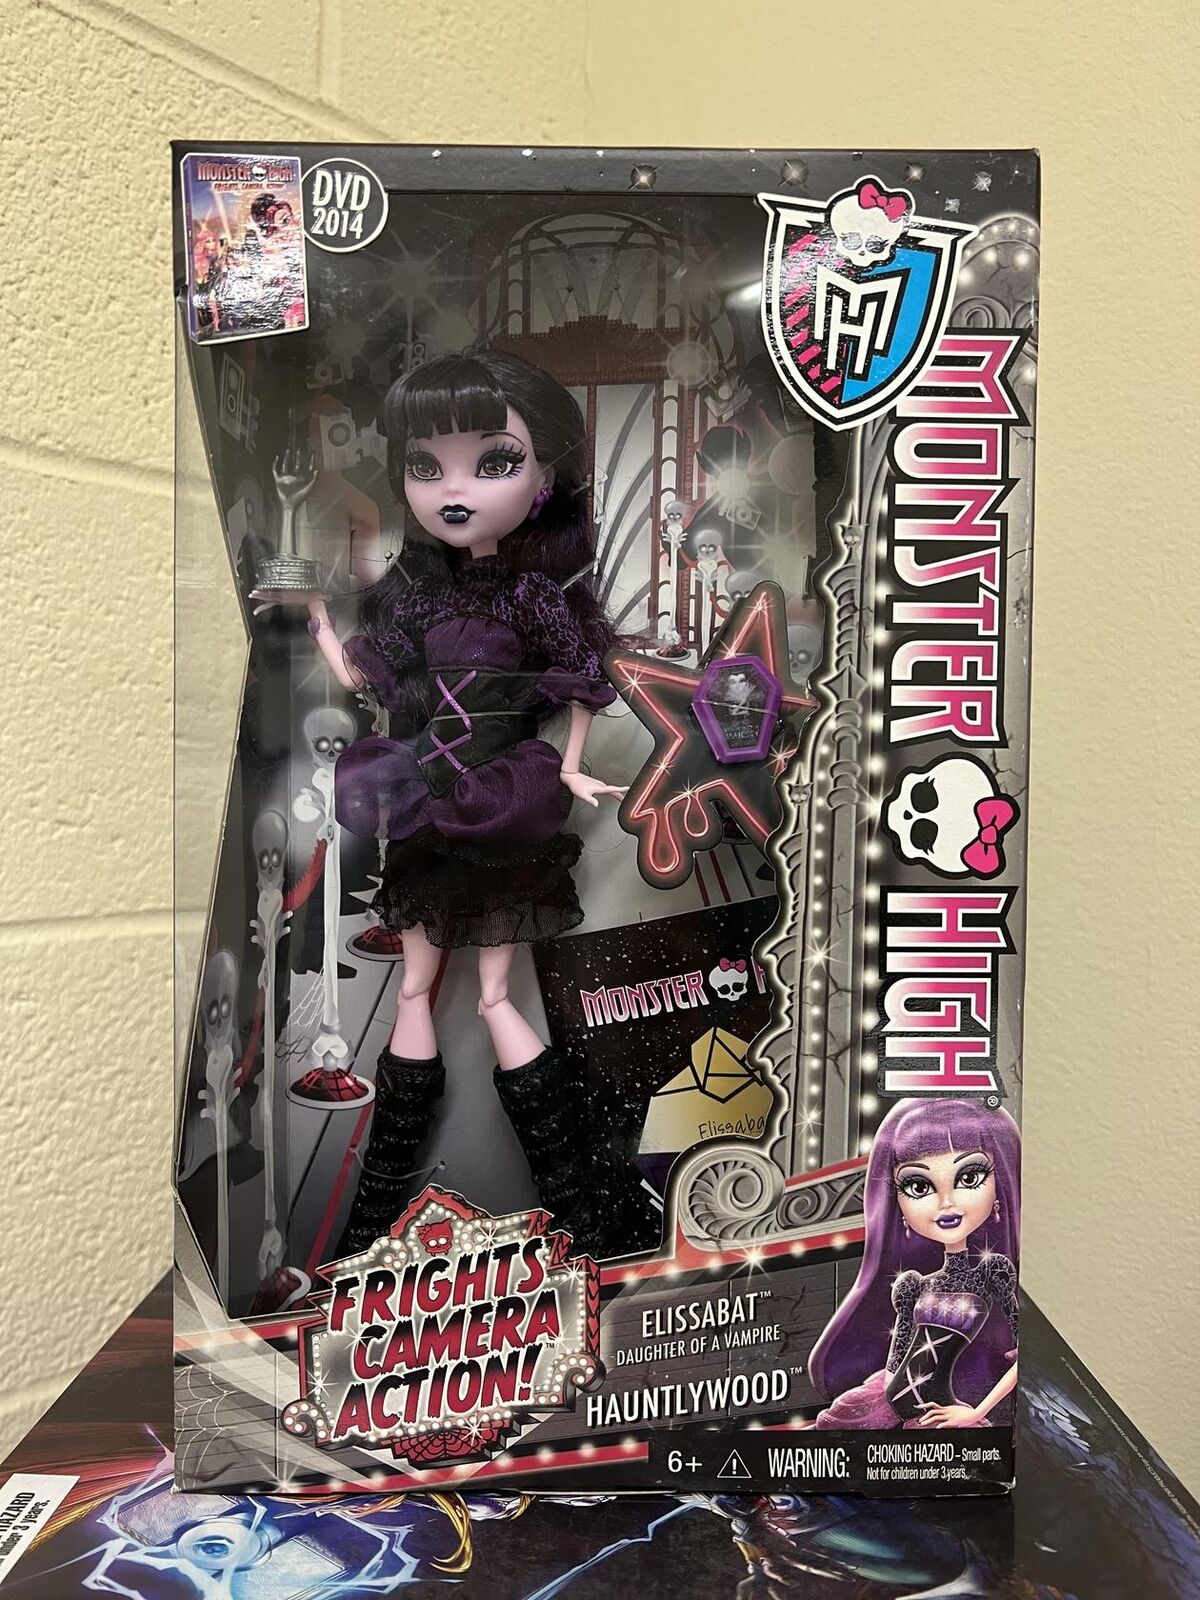 Monster High Frights Camera Action! ELISSABAT Hauntlywood Doll Mattel Does not apply